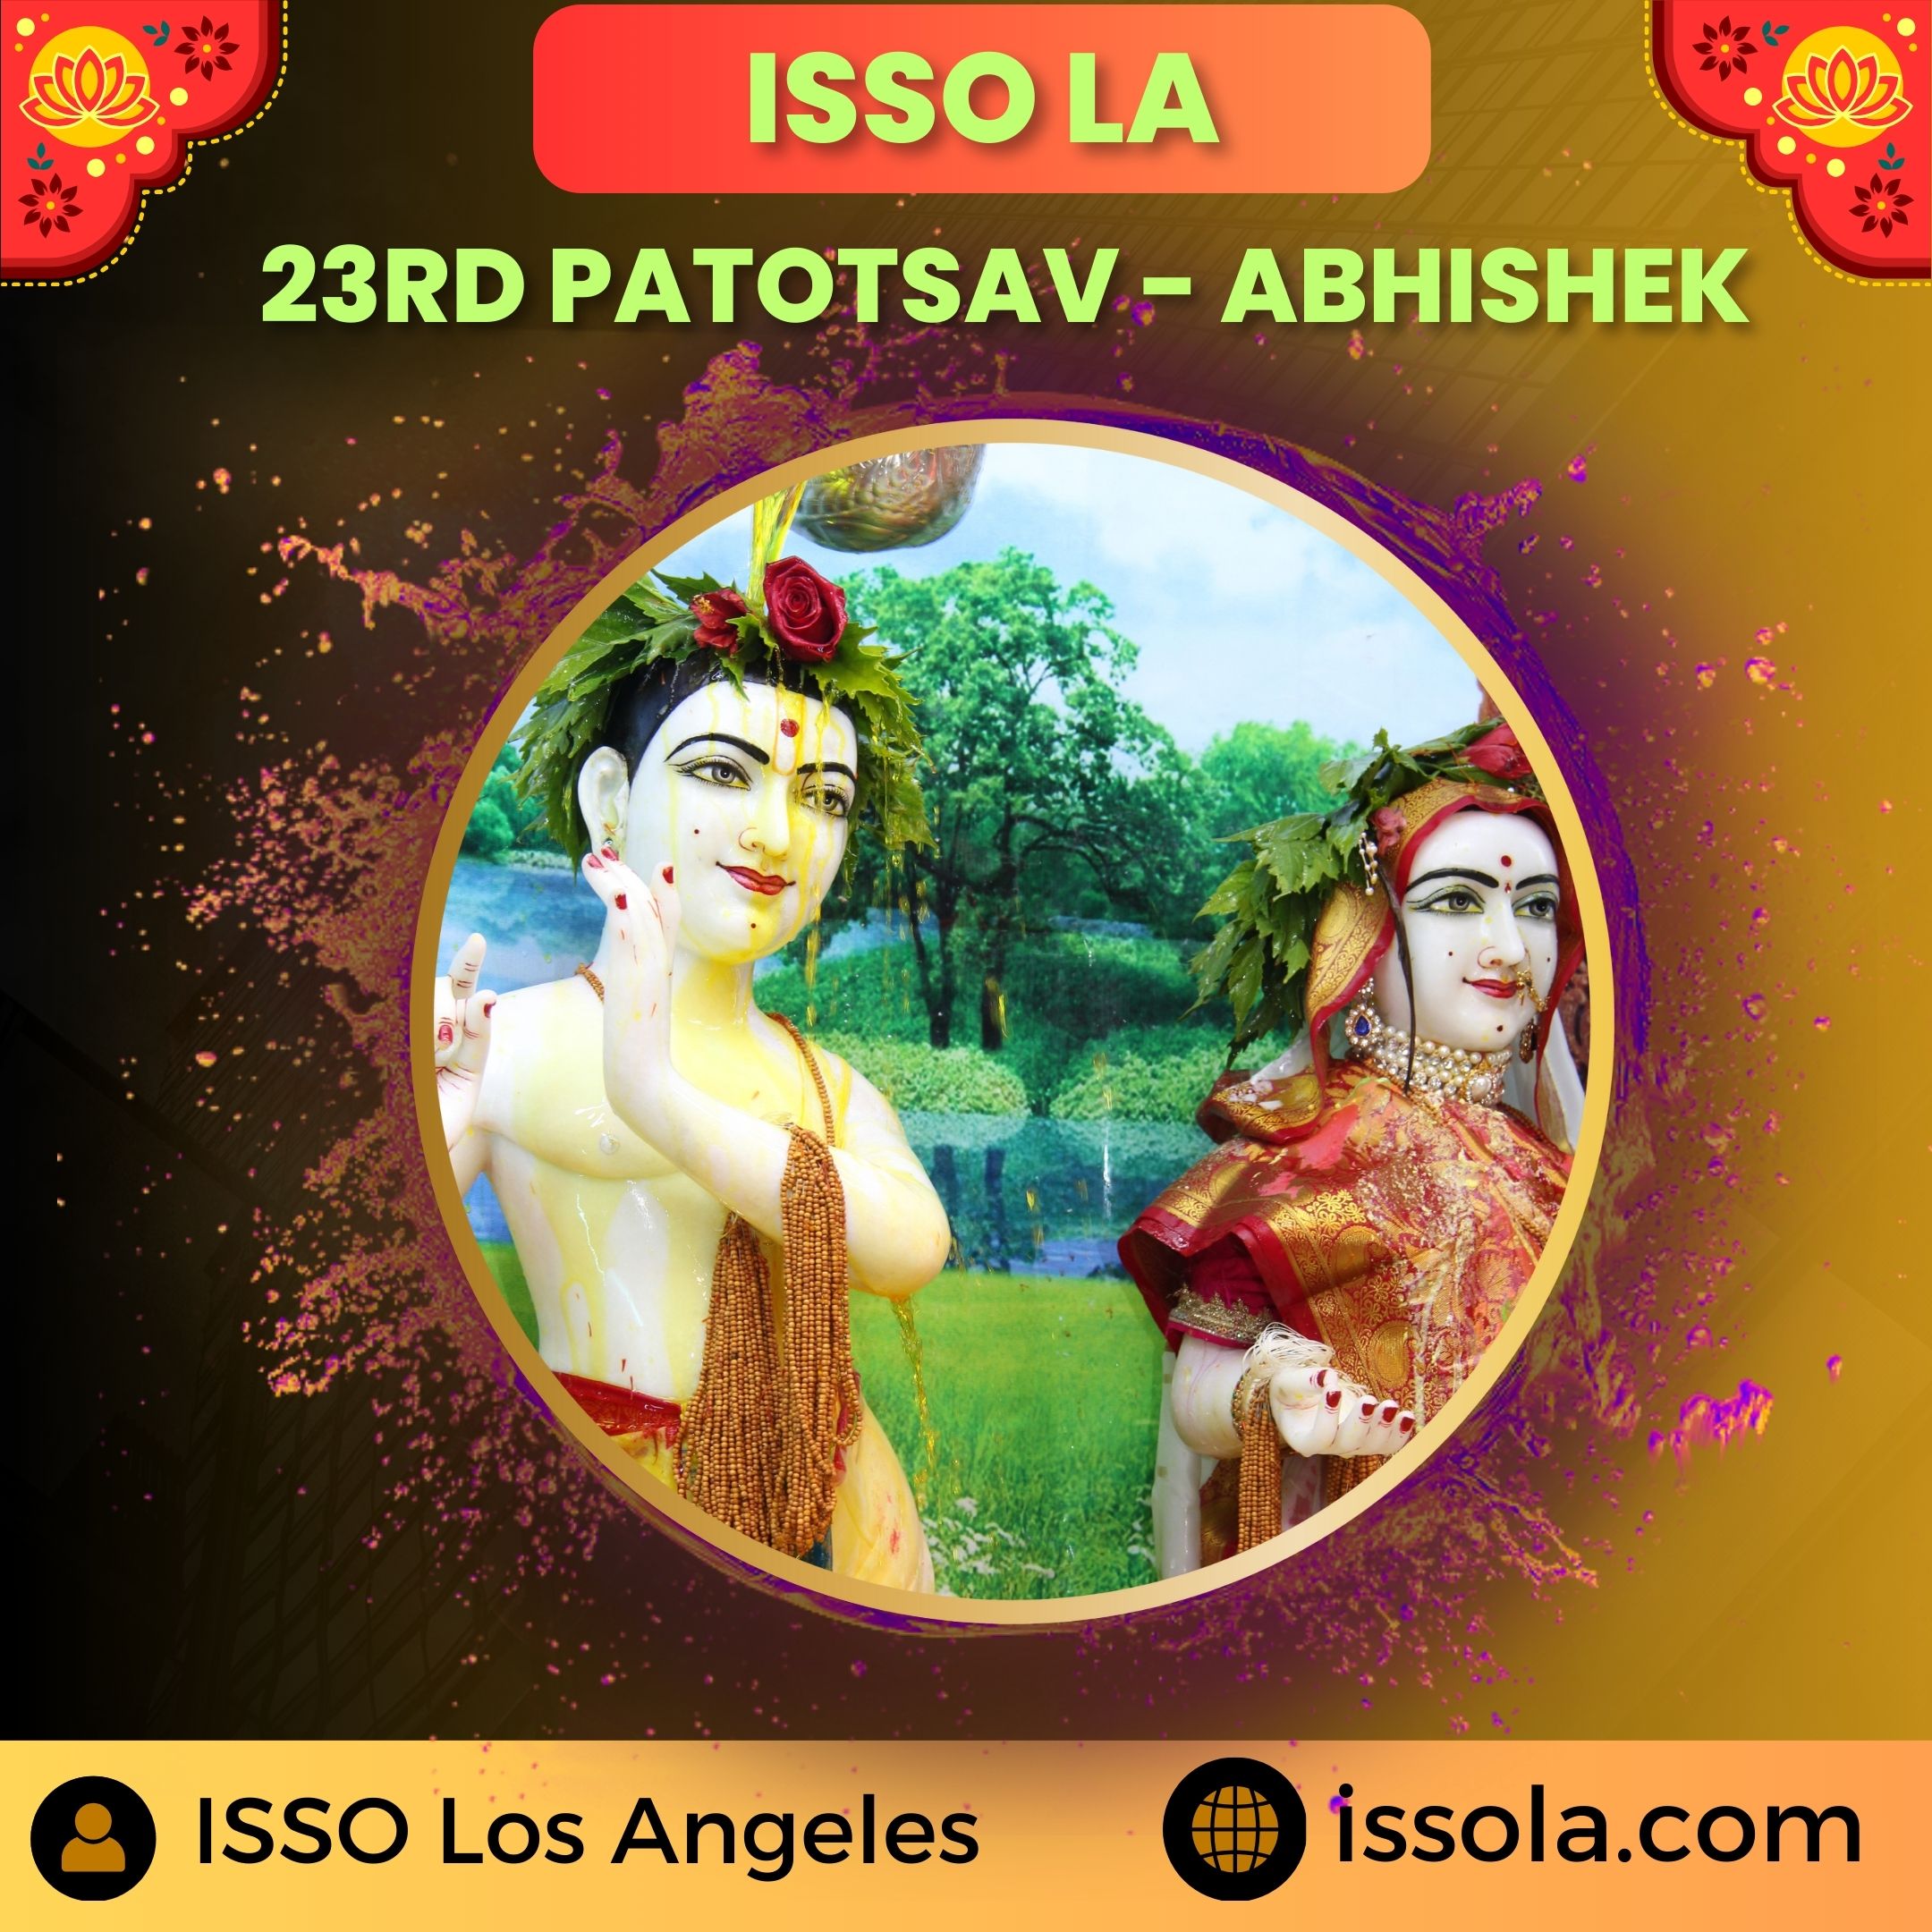 23rd Patotsav Day 3- Abhishek - ISSO Swaminarayan Temple, Norwalk, Los Angeles, www.issola.com